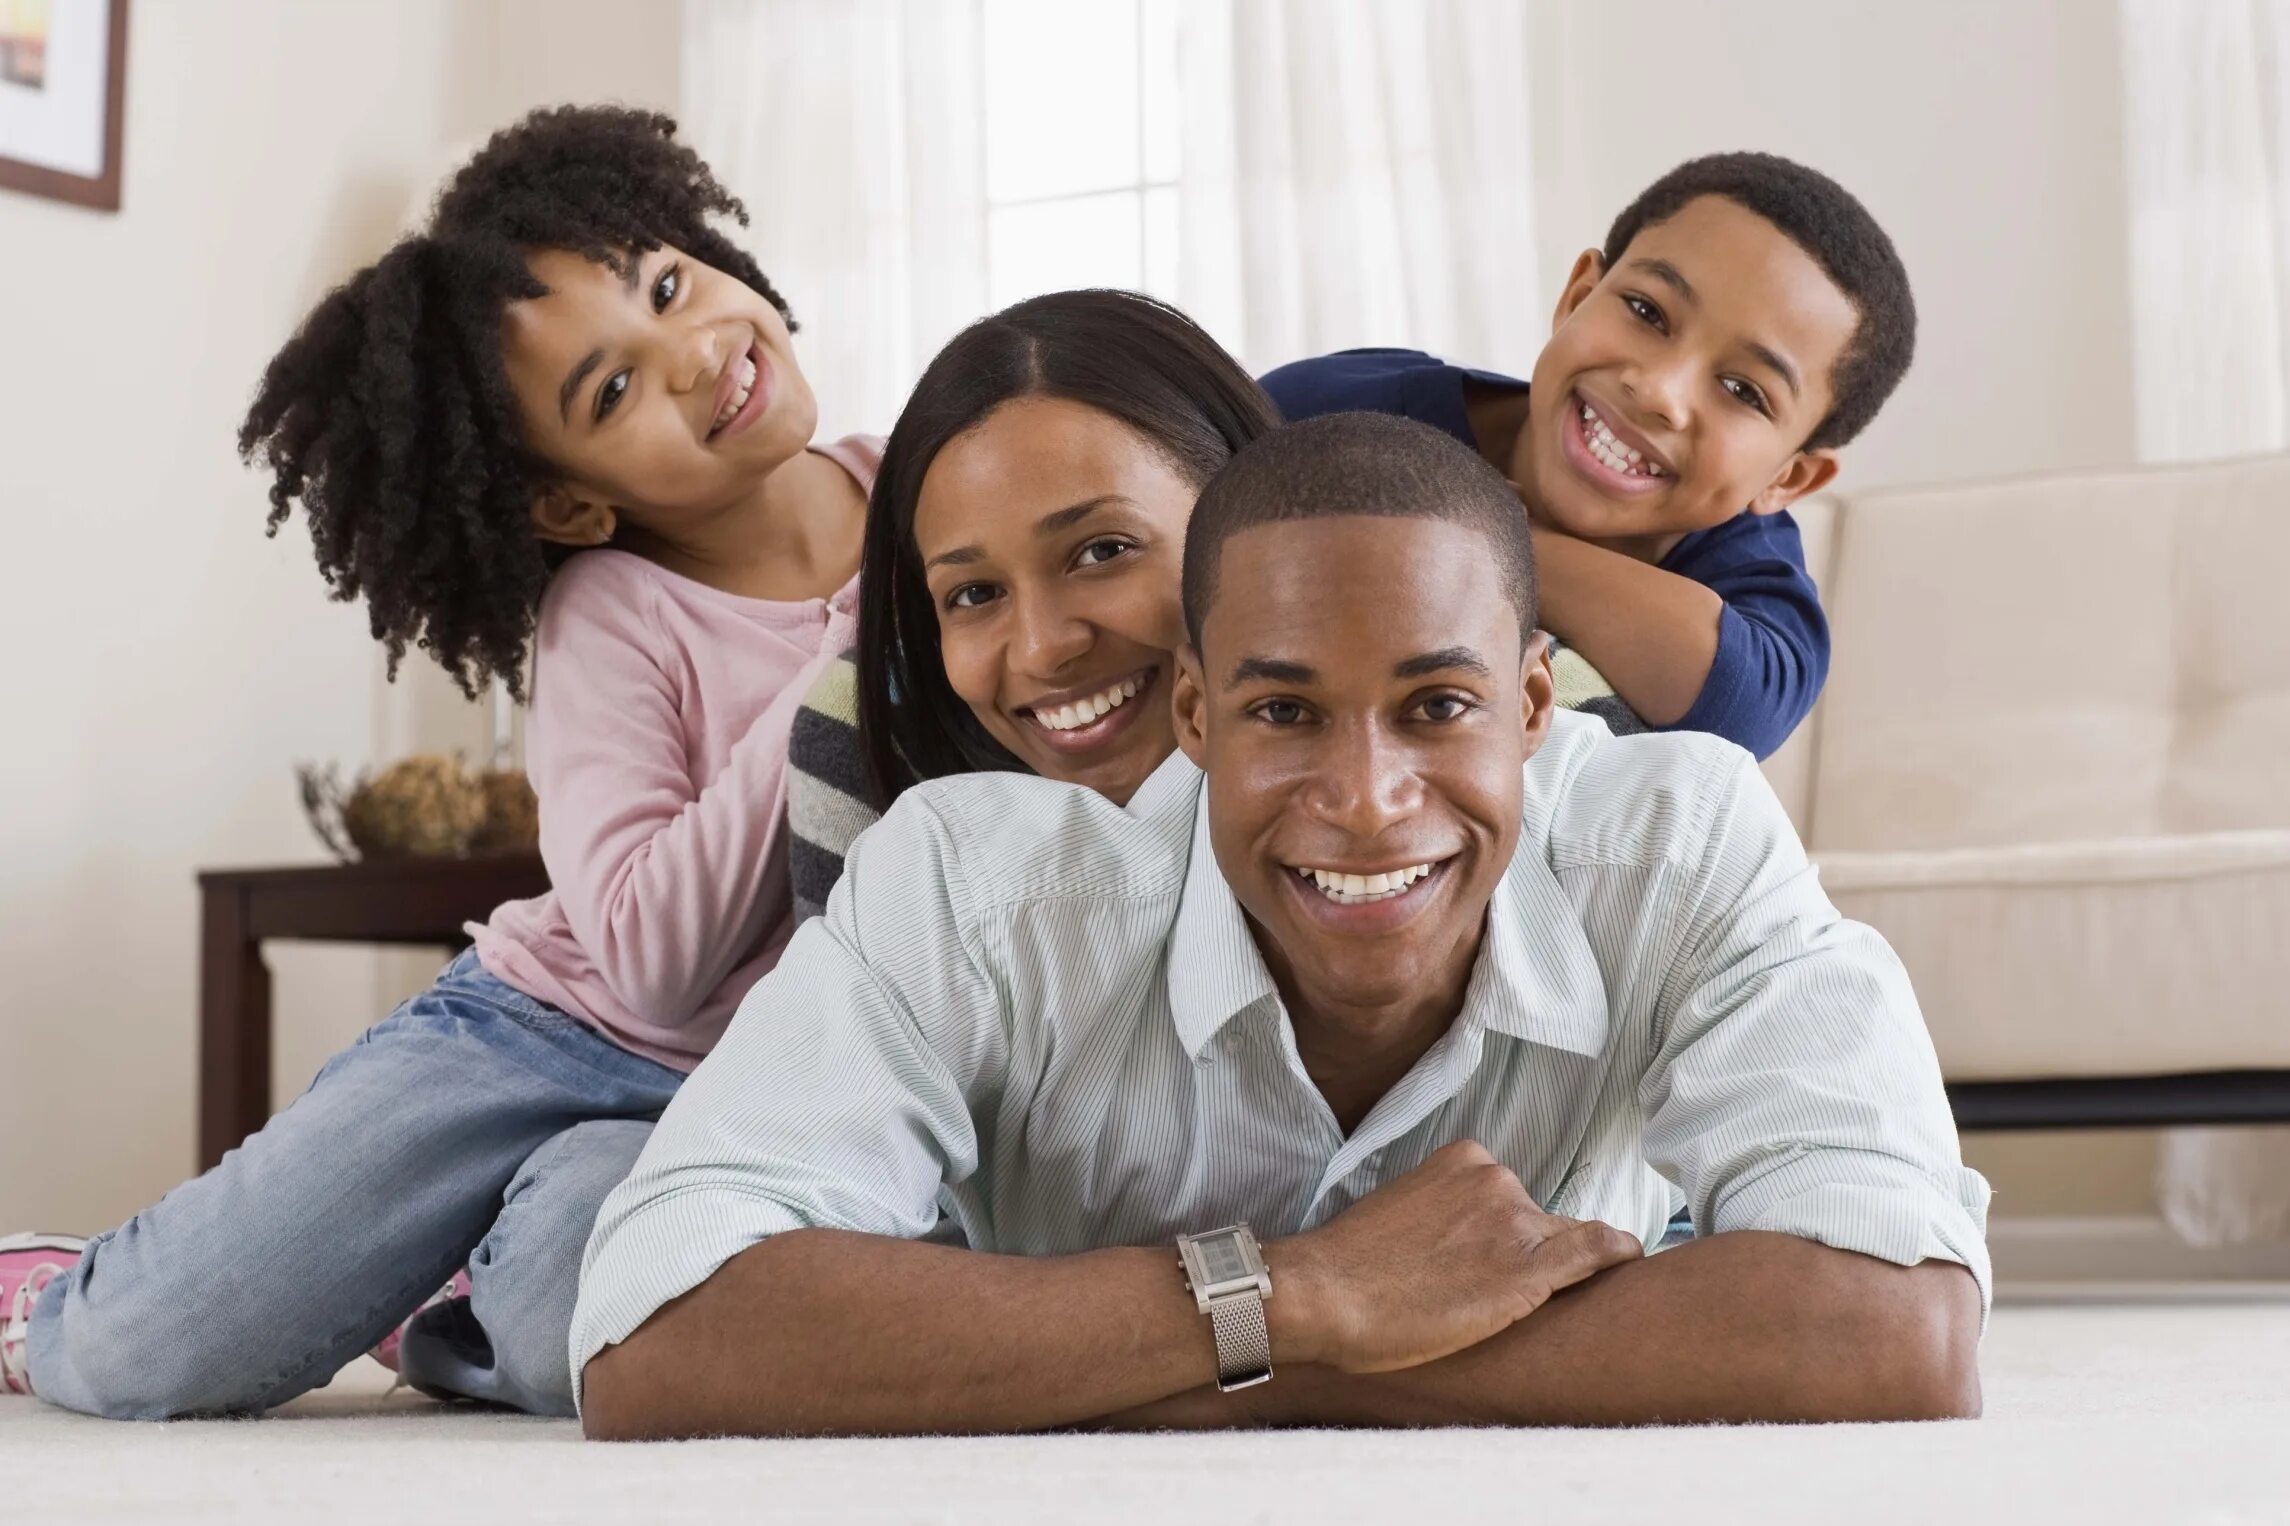 Where do your parents. Американская семья. Семья афроамериканцев. Семья черных. Счастливая американская семья.